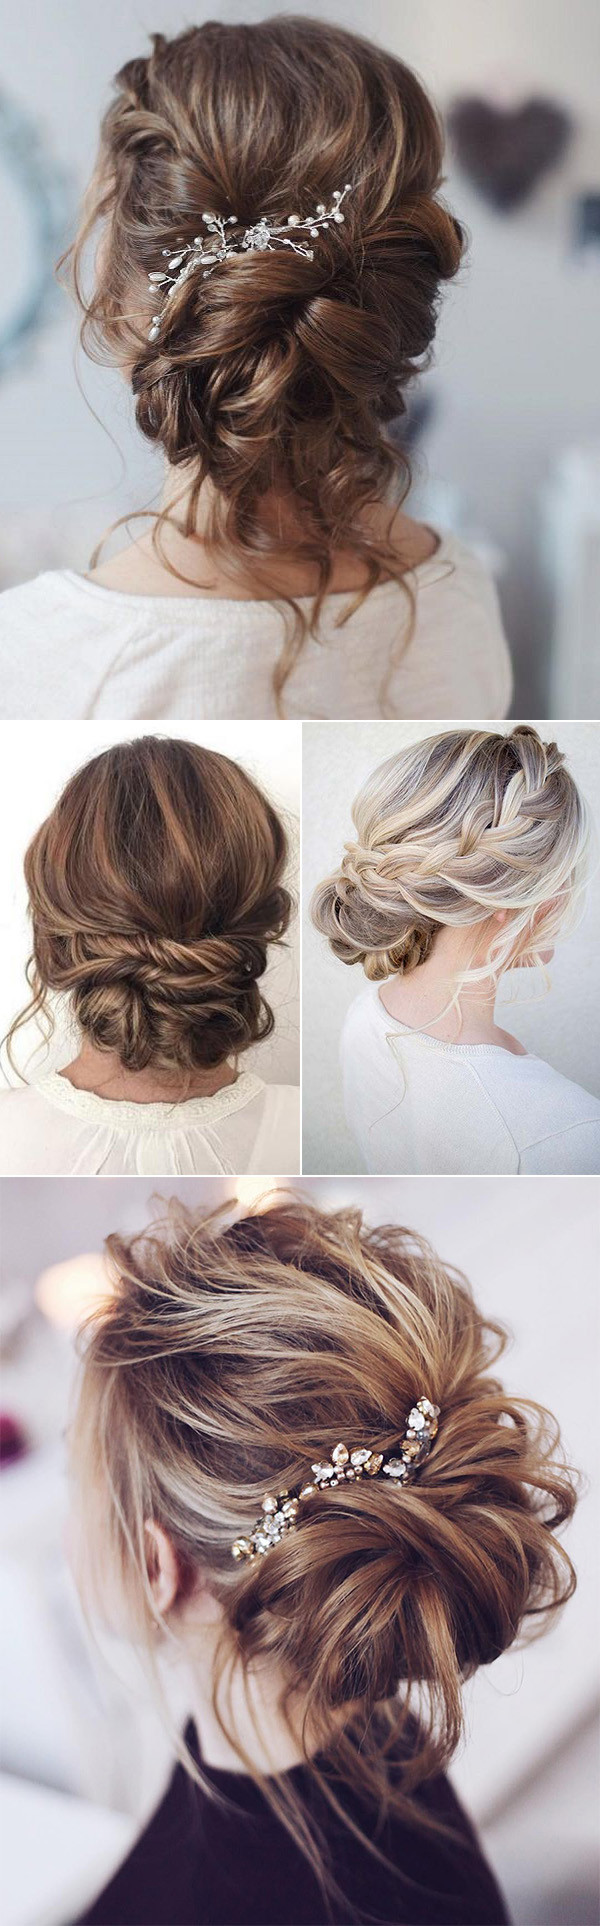 Hairstyle Ideas For Wedding
 25 Drop Dead Bridal Updo Hairstyles Ideas for Any Wedding